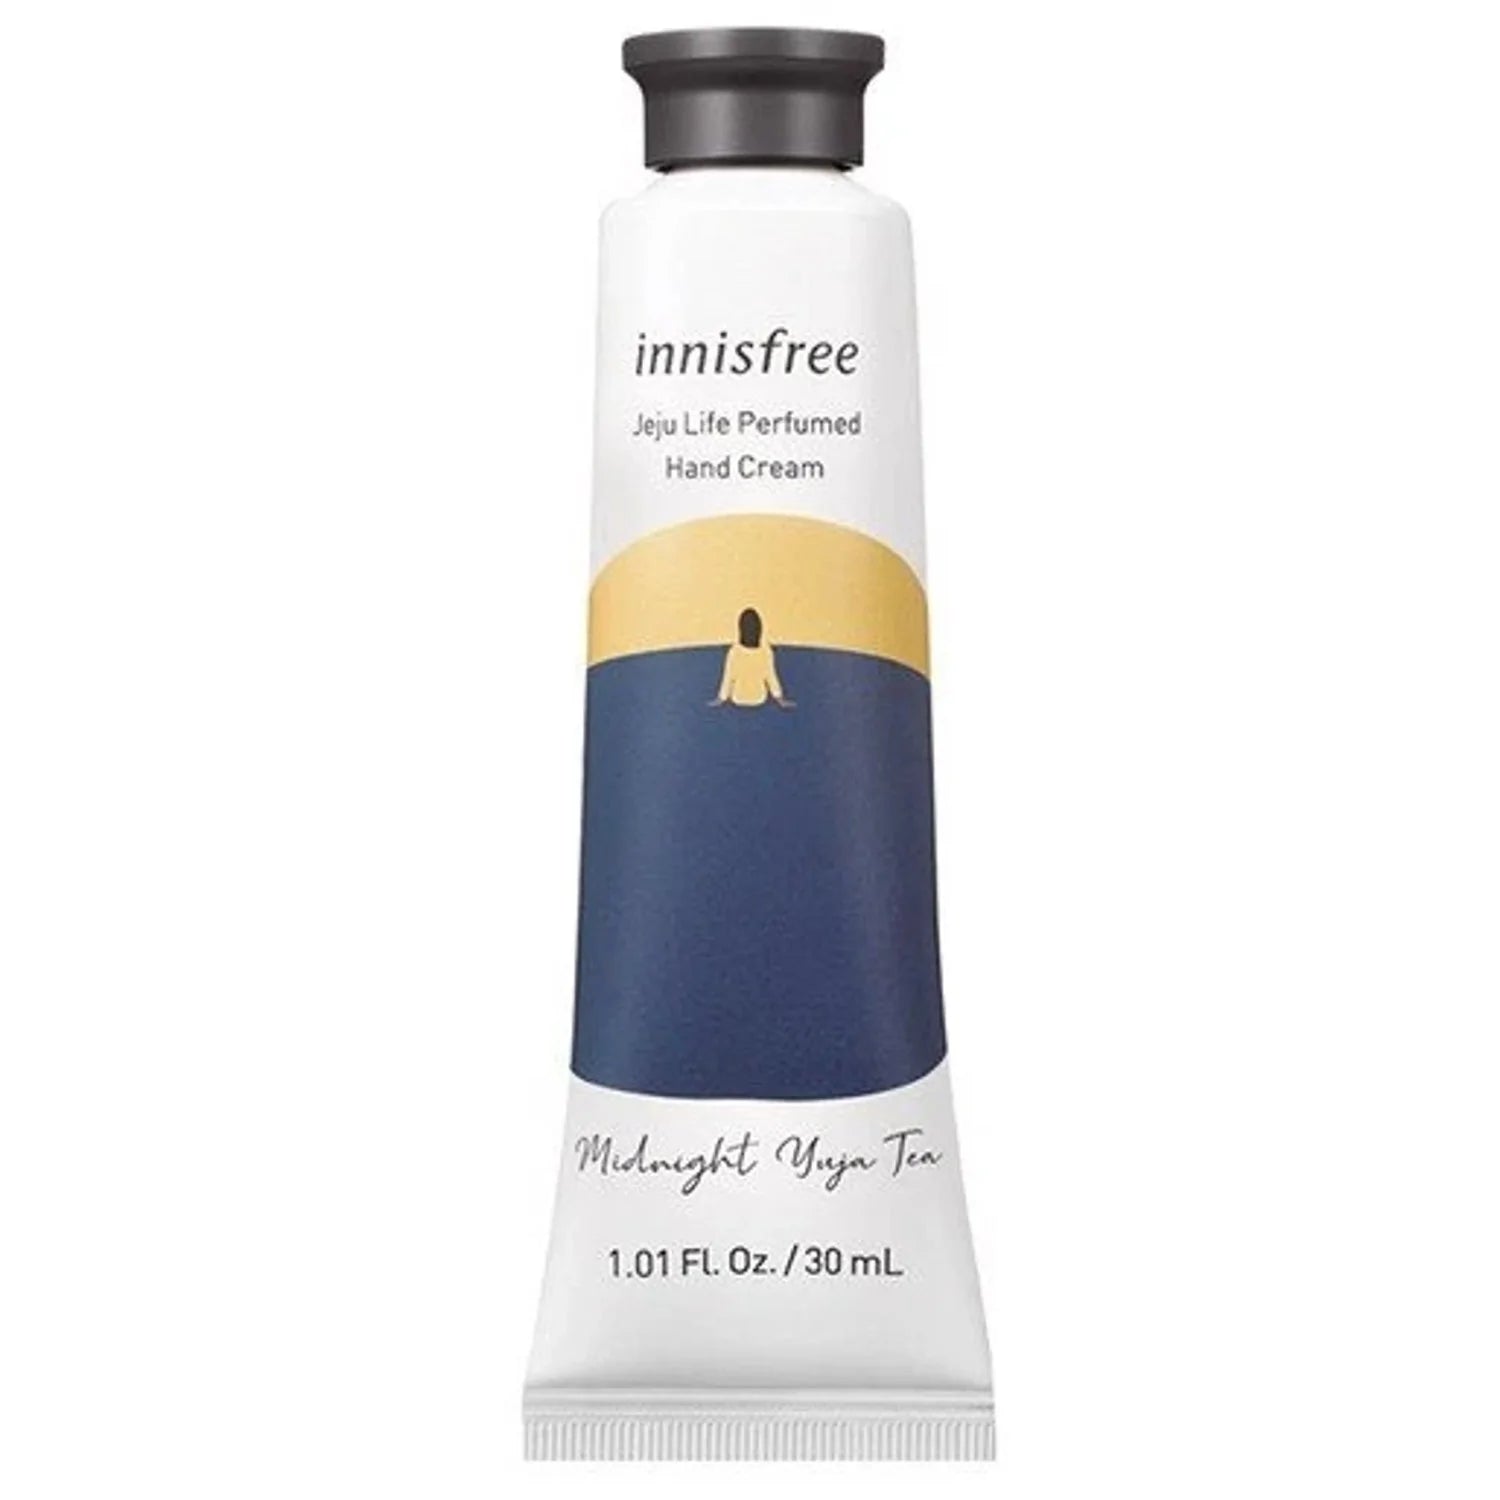 INNISFREE - Jeju Life Perfumed Hand Cream Midnight Yuja Tea